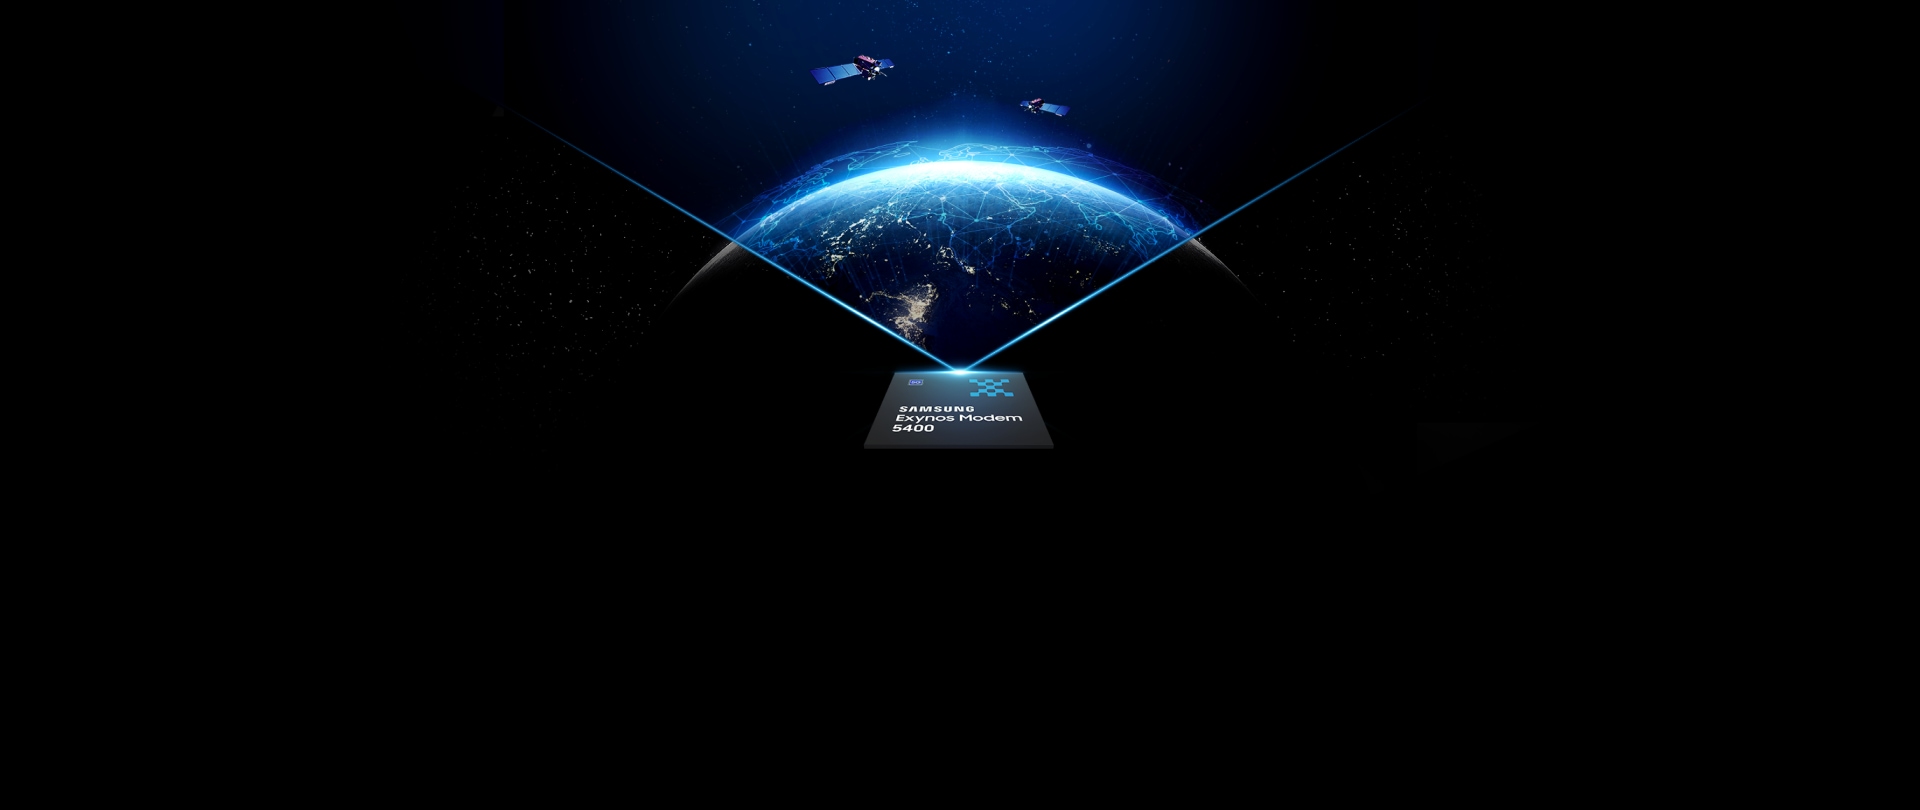 Earth as seen from orbit through a stylized diamond cutout, with 'Samsung Exynos Modem 5400'.